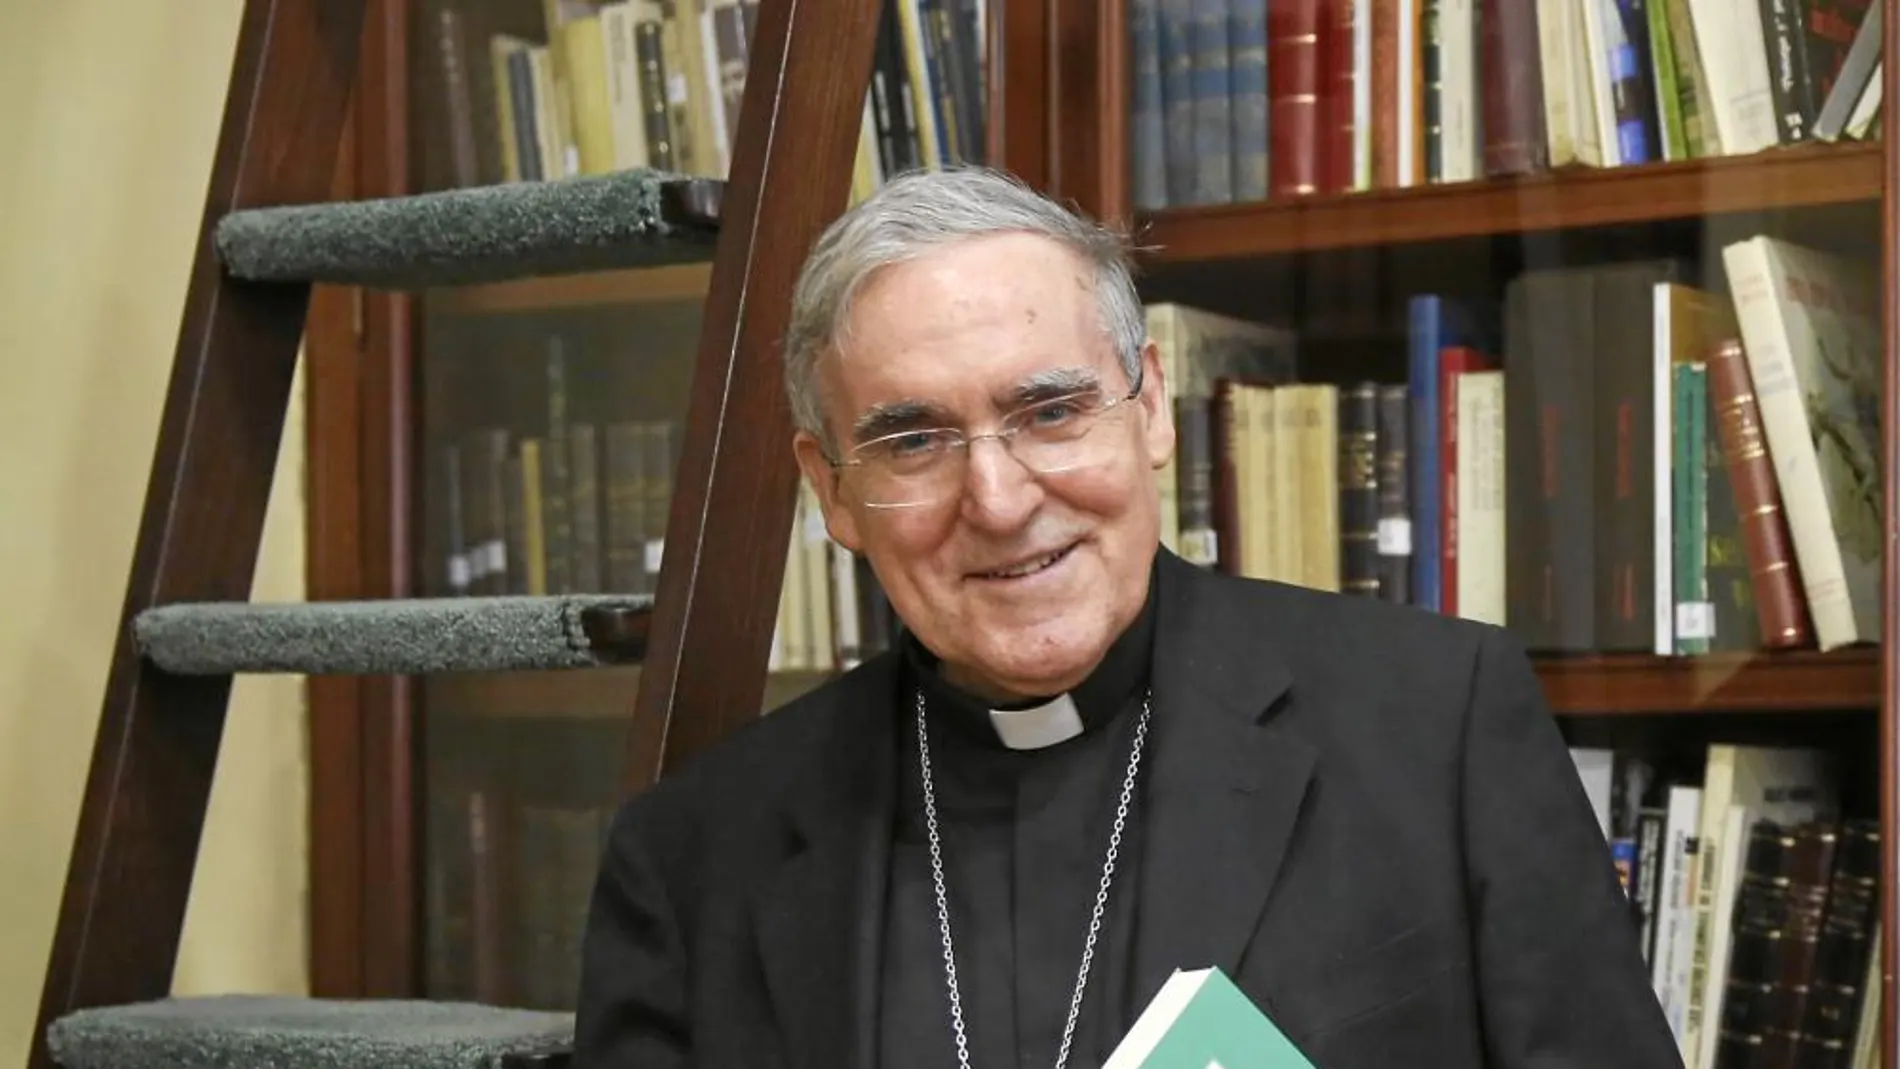 Lluís Martínez Sistach /Cardenal arzobispo de Barcelona